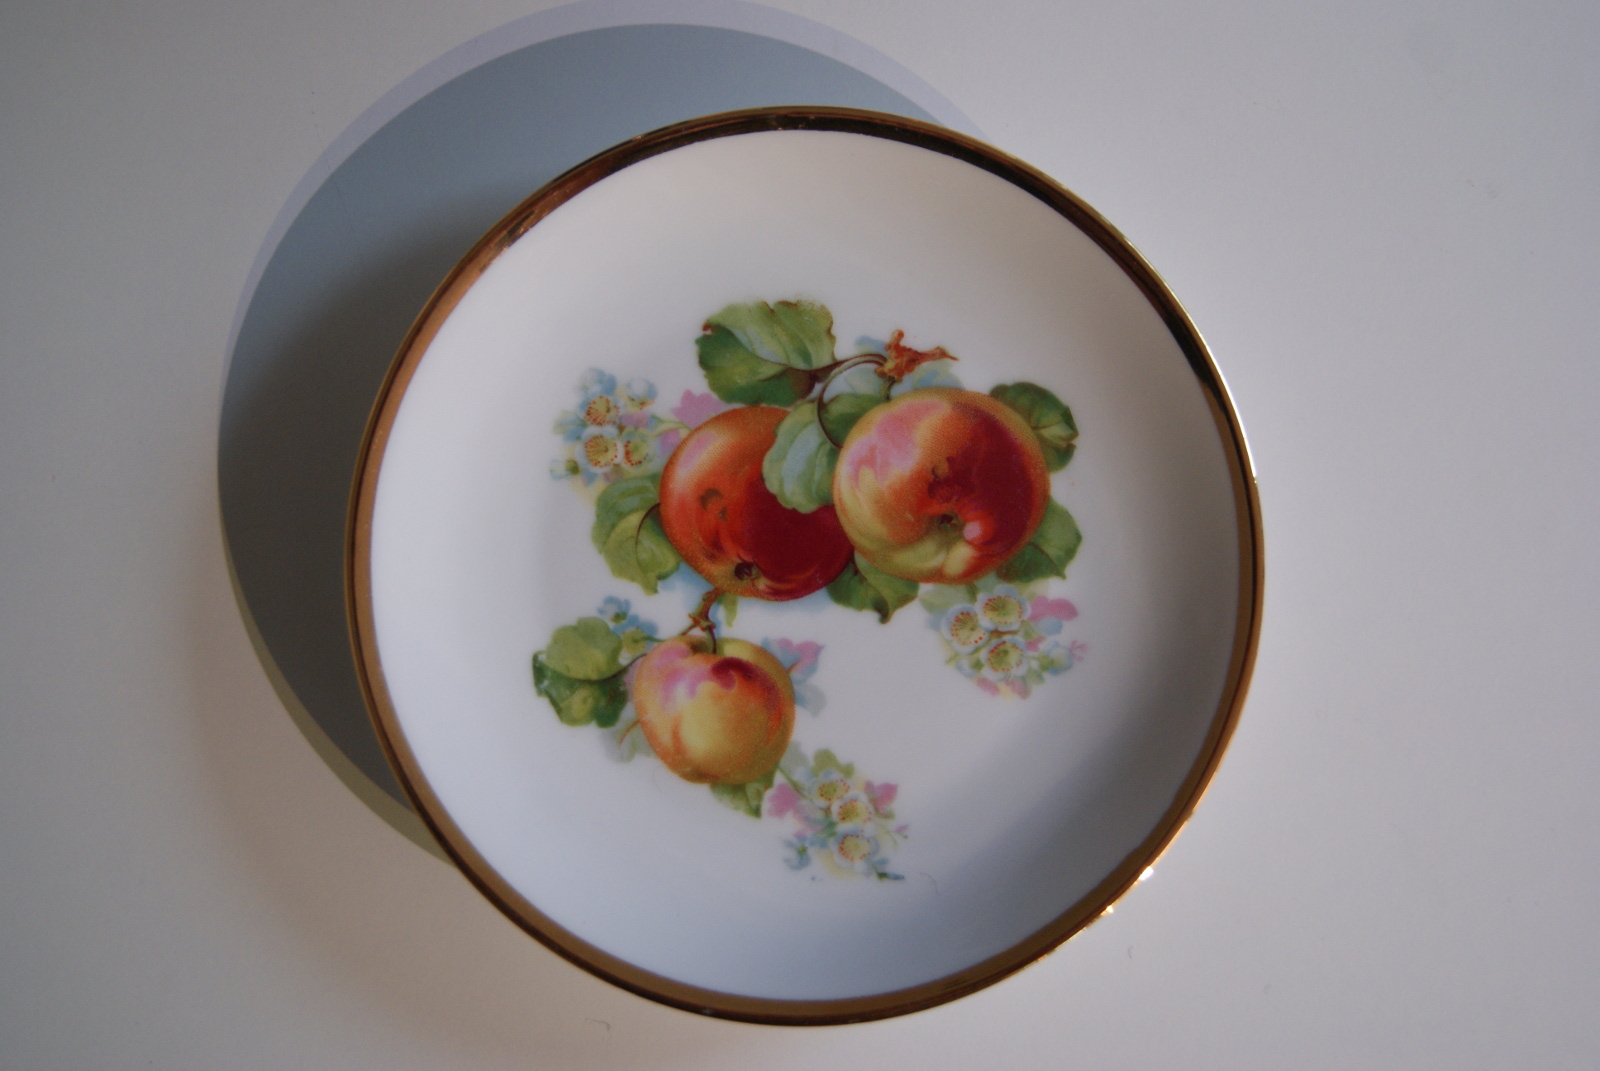 Waldenburg - Altwasser plate with apples 1927 and 1928